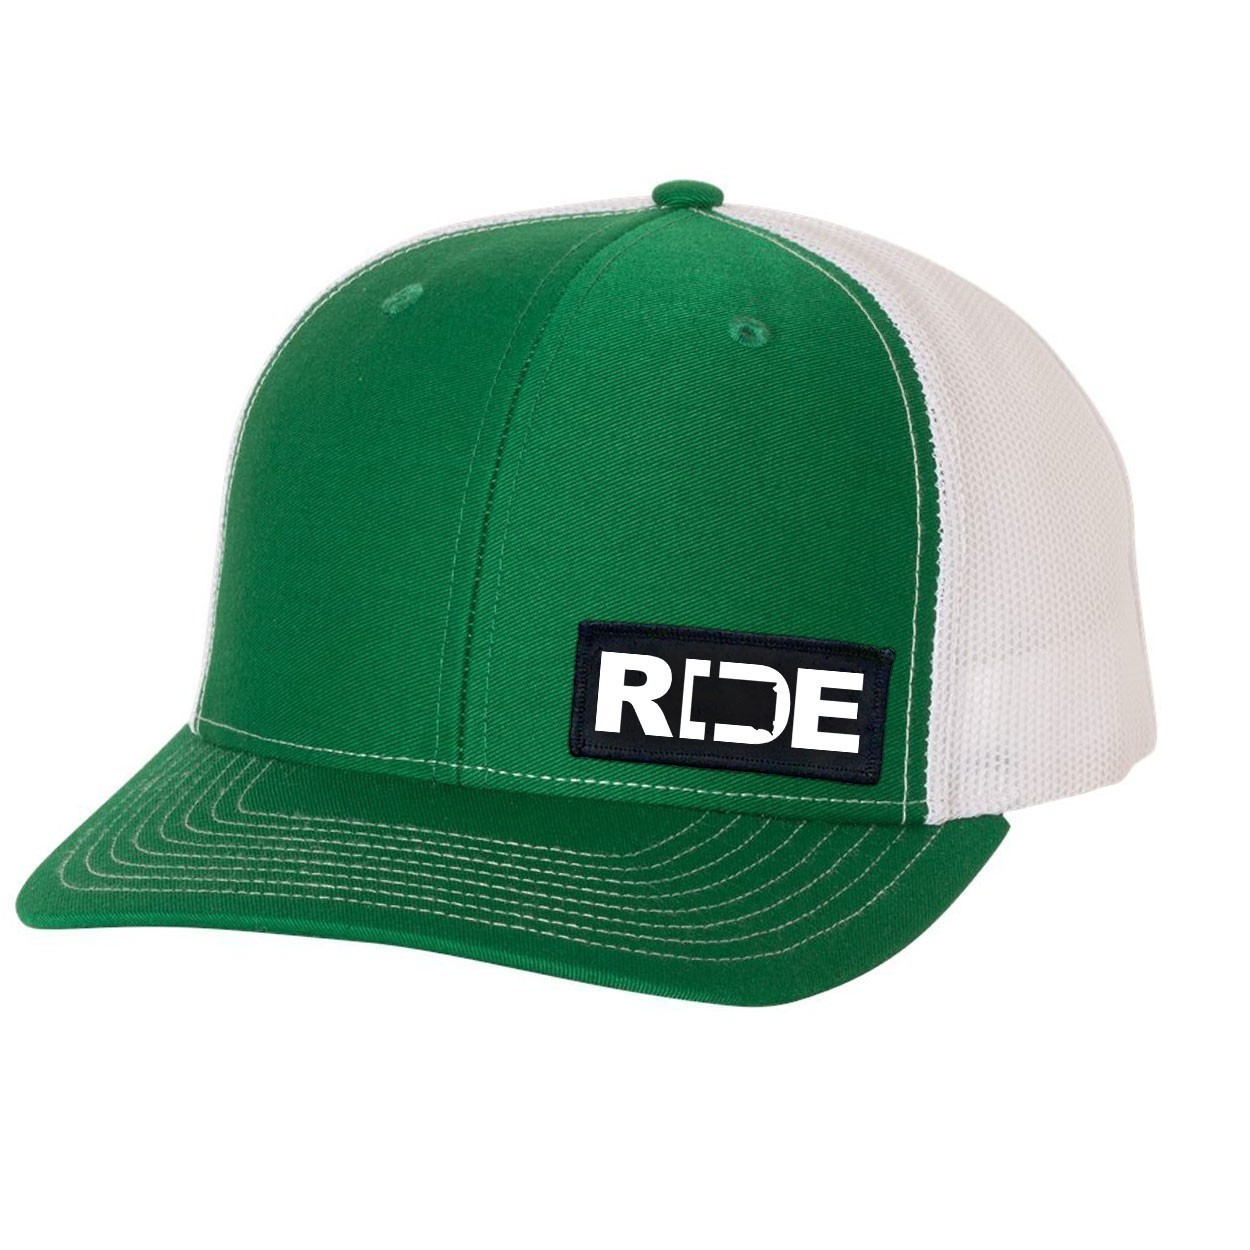 Ride South Dakota Night Out Woven Patch Snapback Trucker Hat Green/White (White Logo)